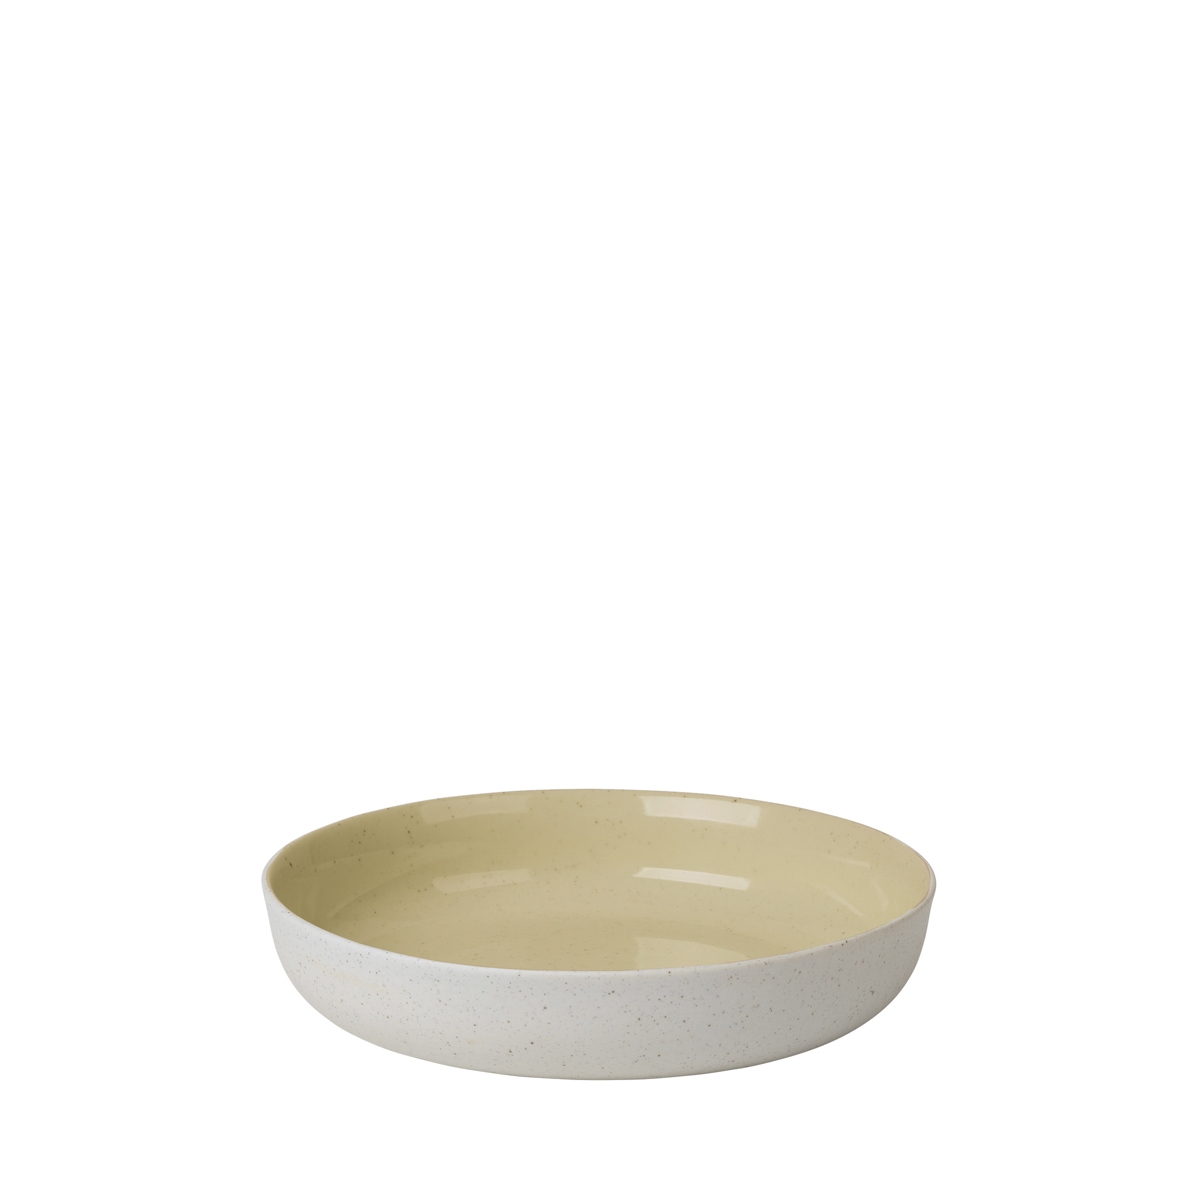 Tiefer Teller -SABLO- Savannah 500 ml, Ø 18,5 cm. Material: Keramik. Von Blomus.